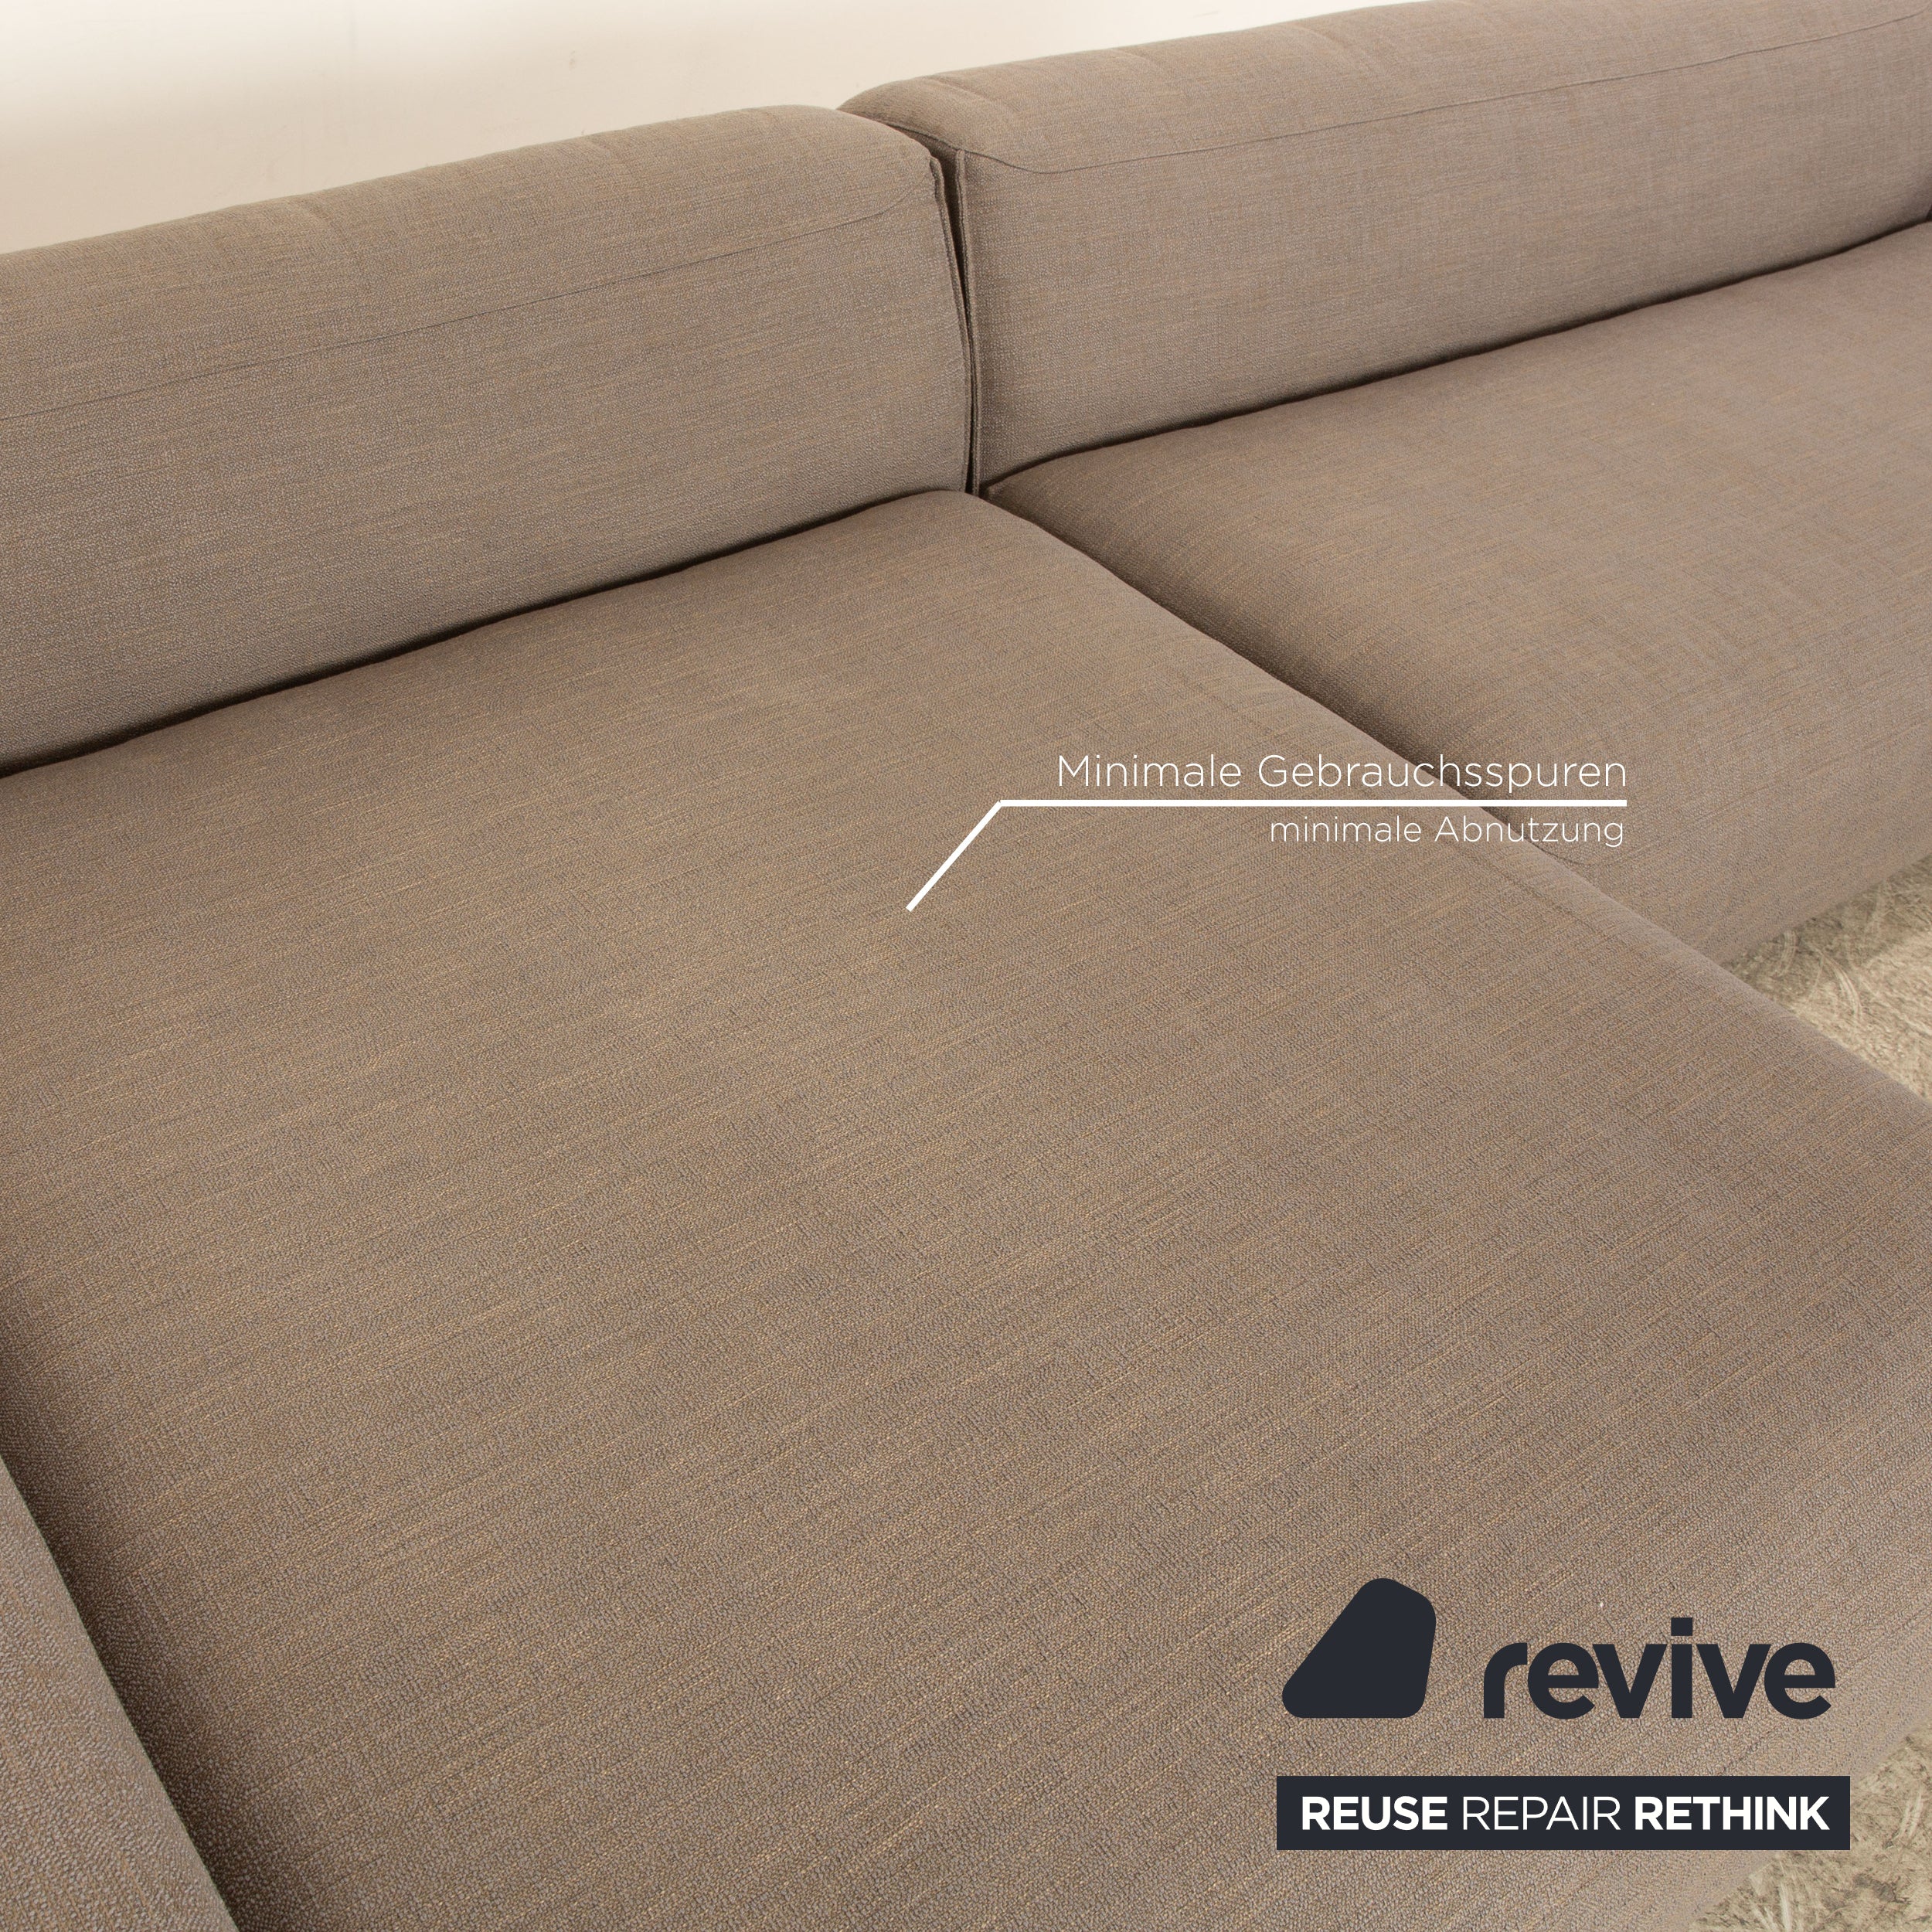 Rolf Benz Mio Fabric Sofa Set Grey Corner Sofa Stool Recamiere Left Sofa Couch